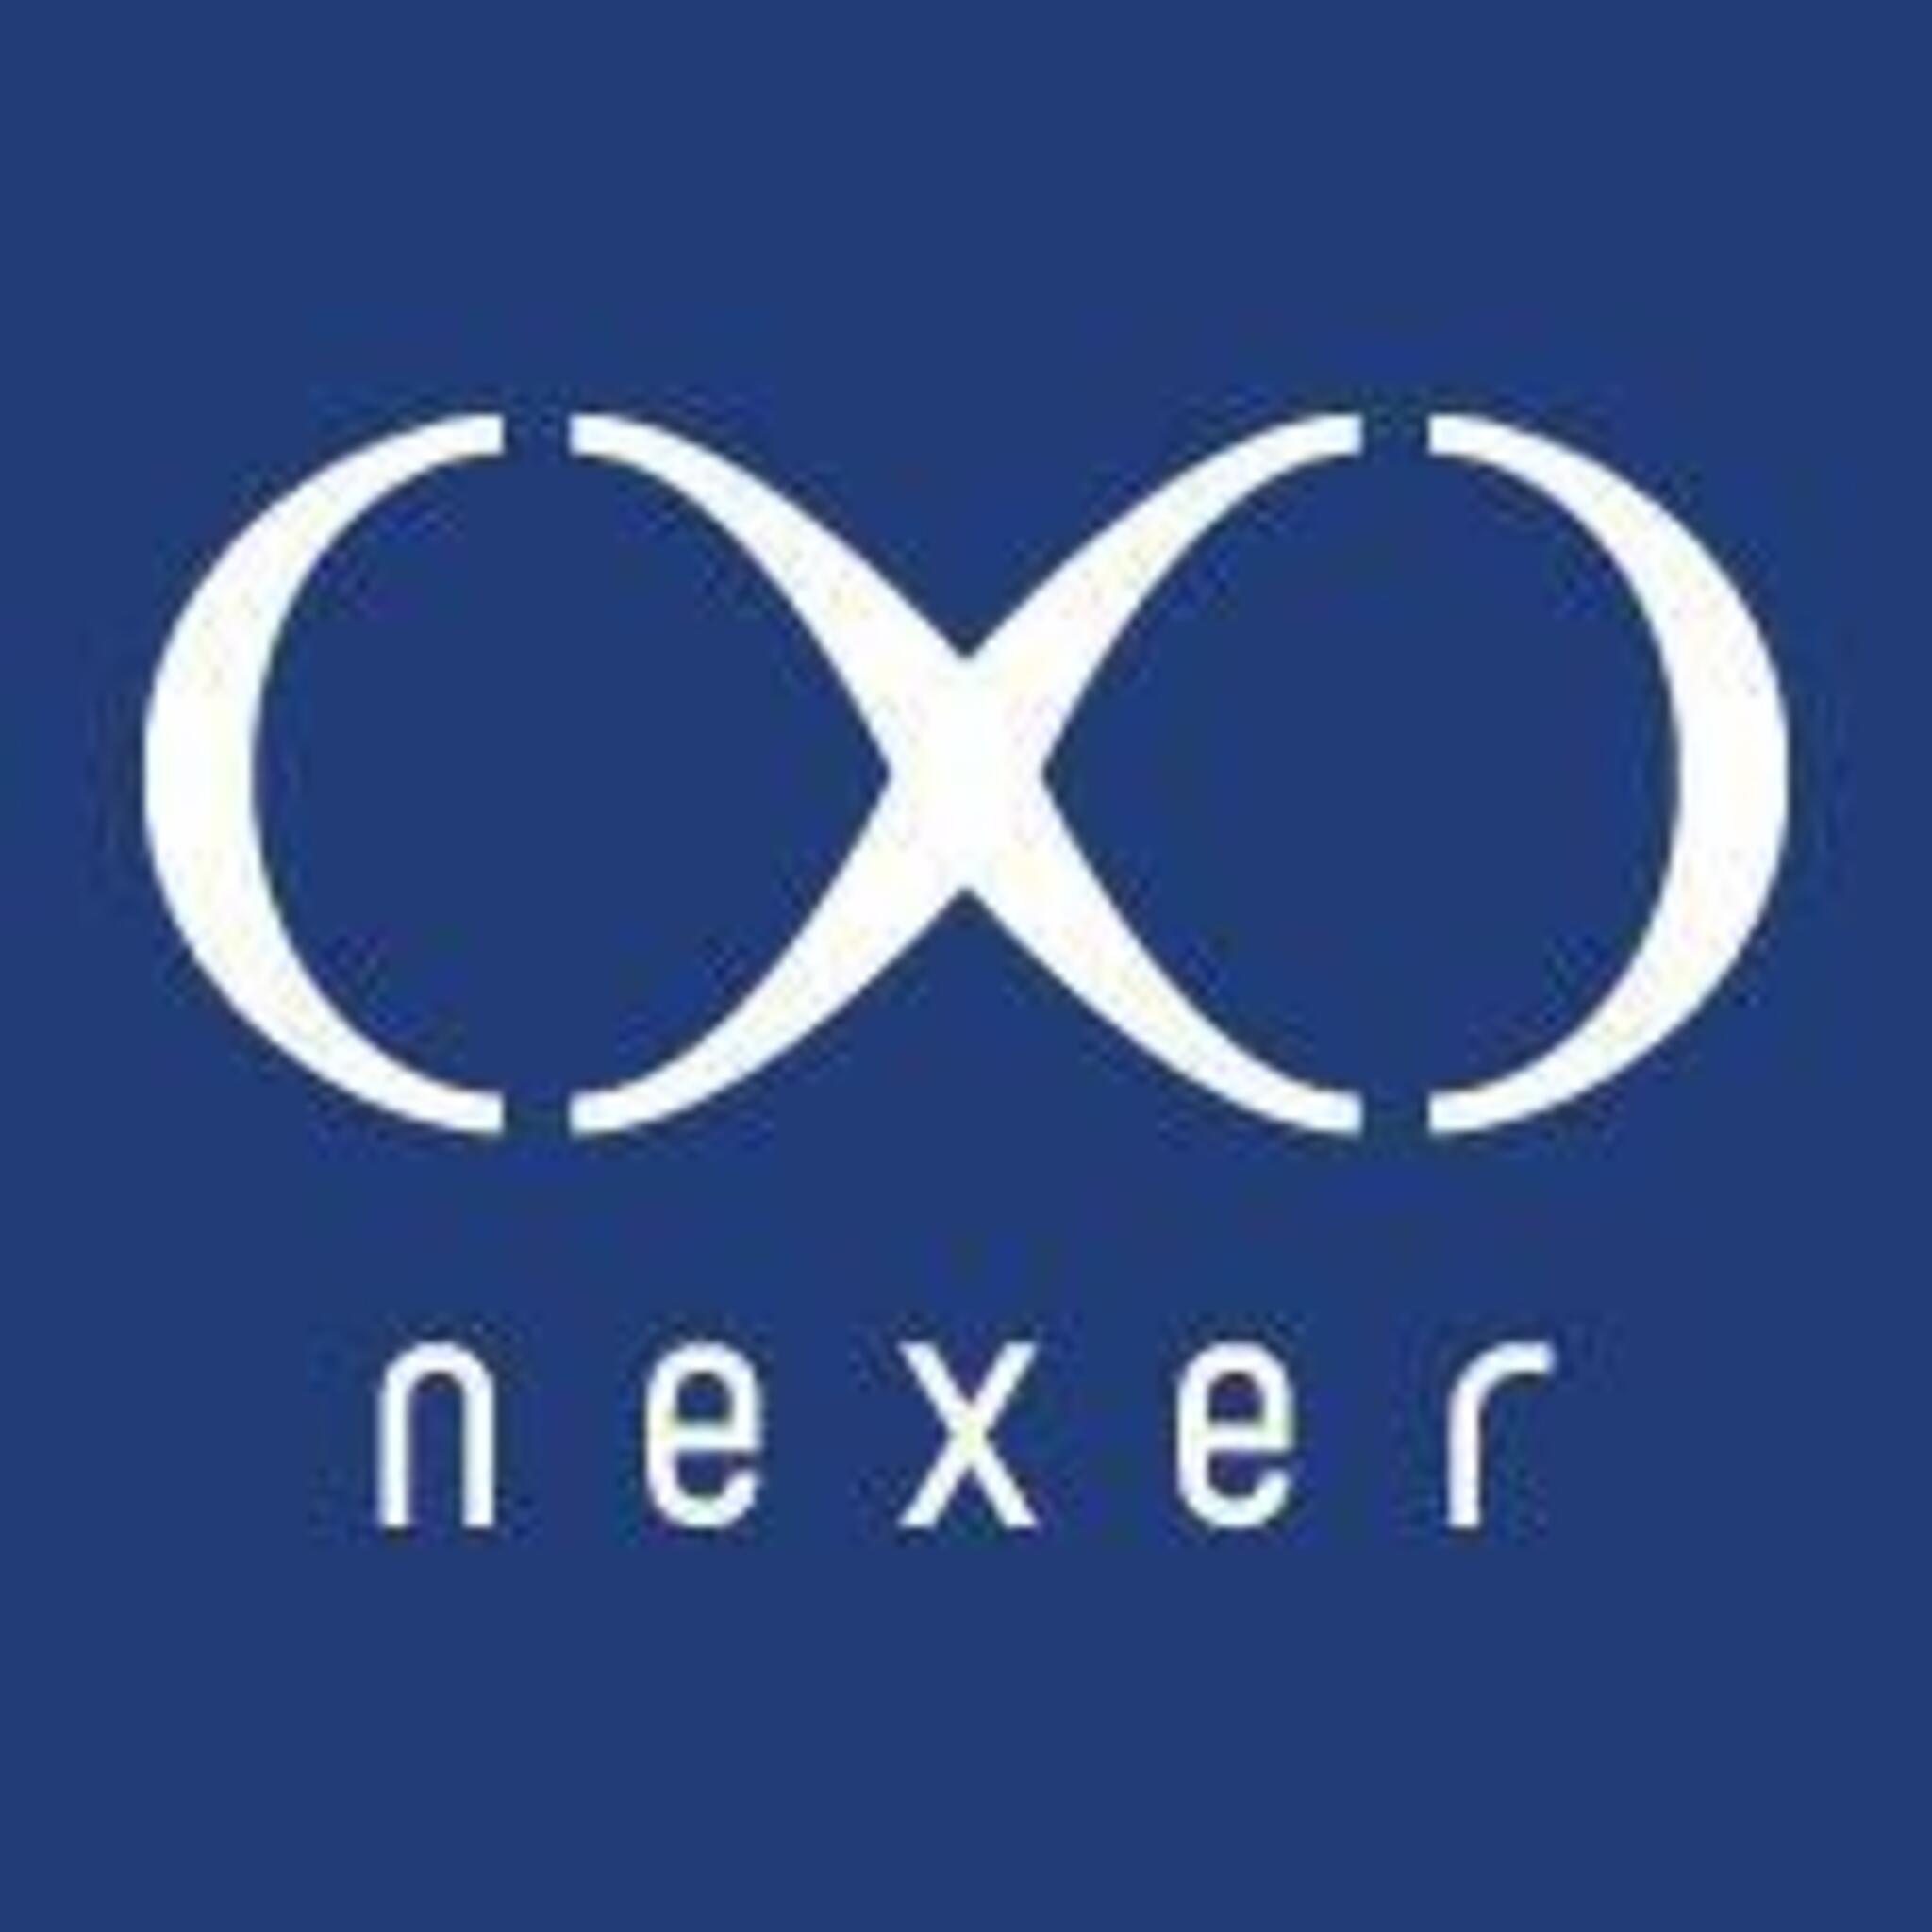 株式会社NEXERの代表写真1